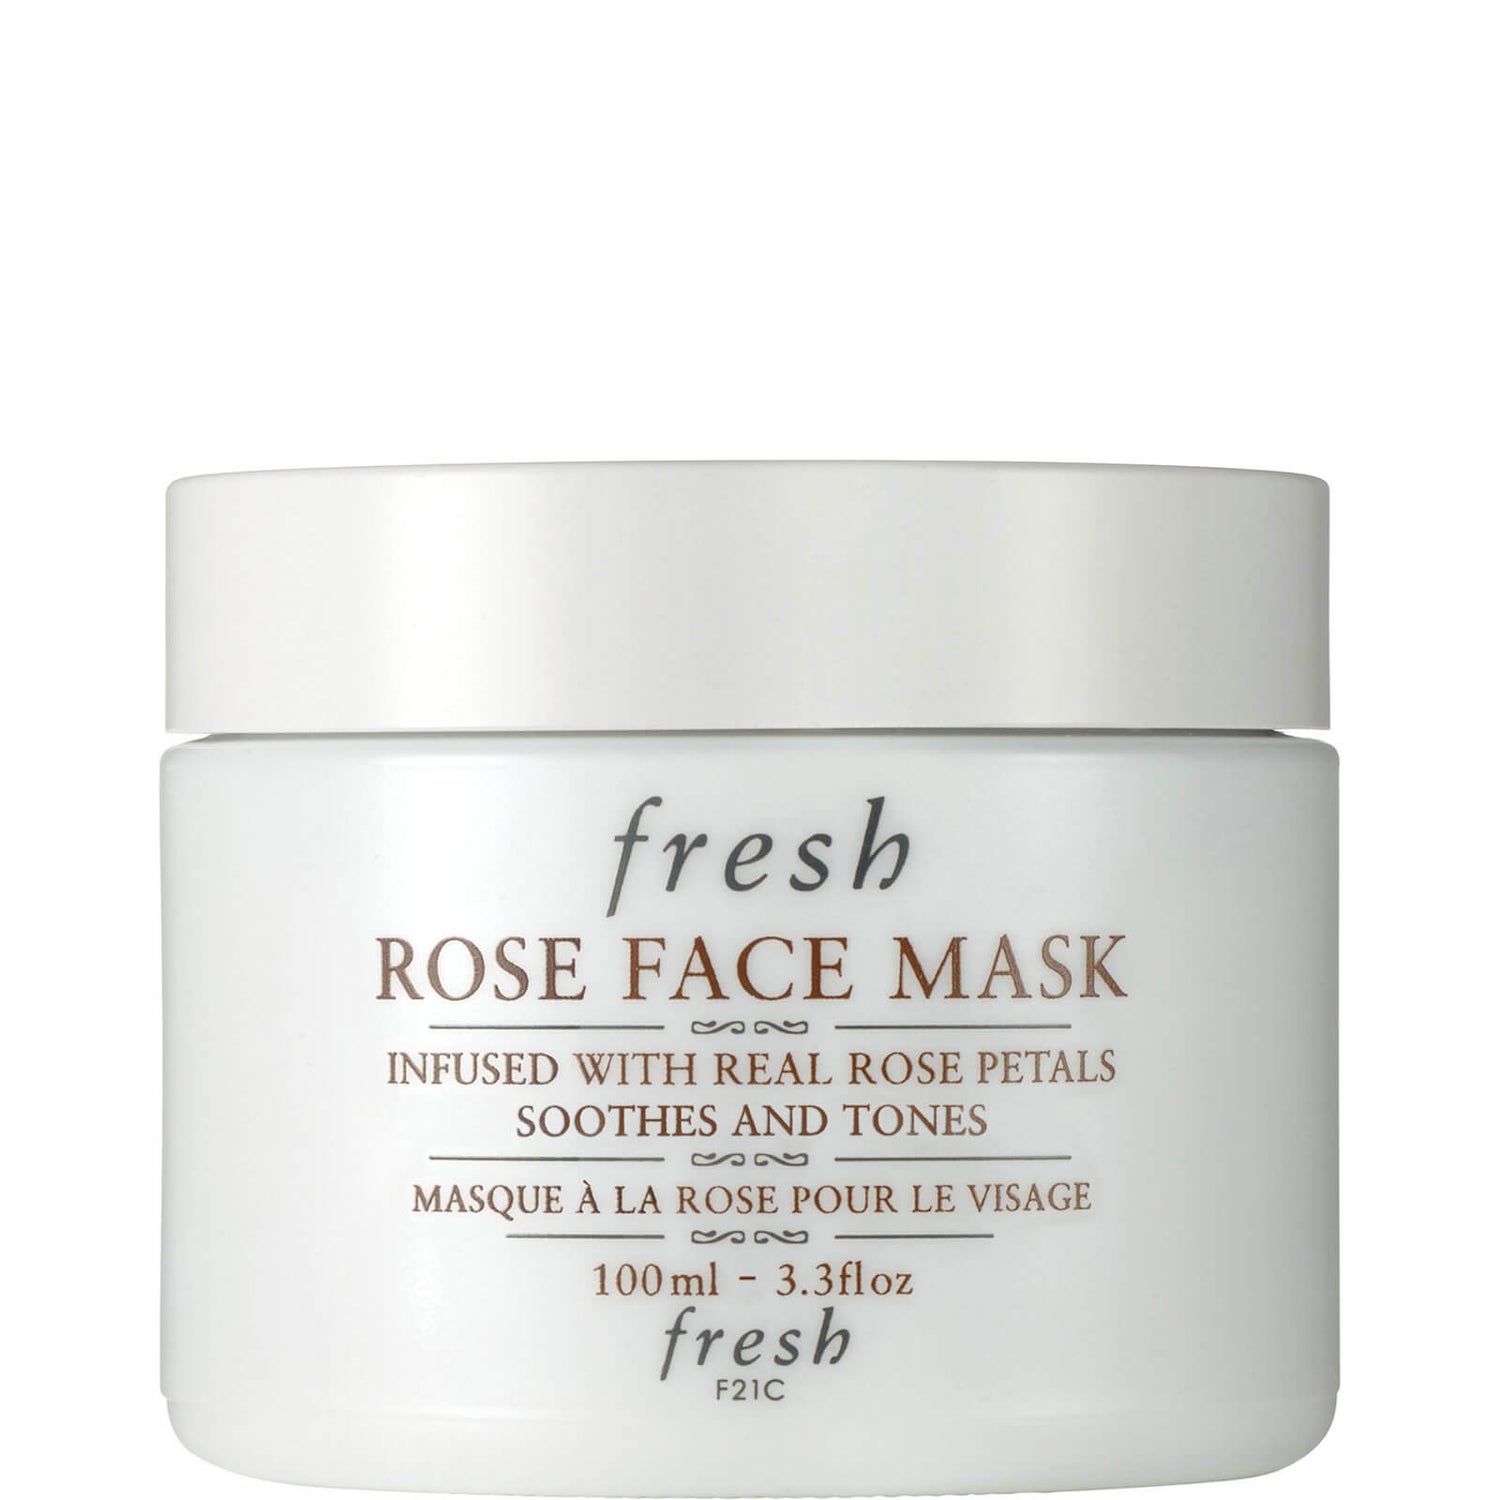 Fresh Rose Face Mask 100ml | Cult Beauty